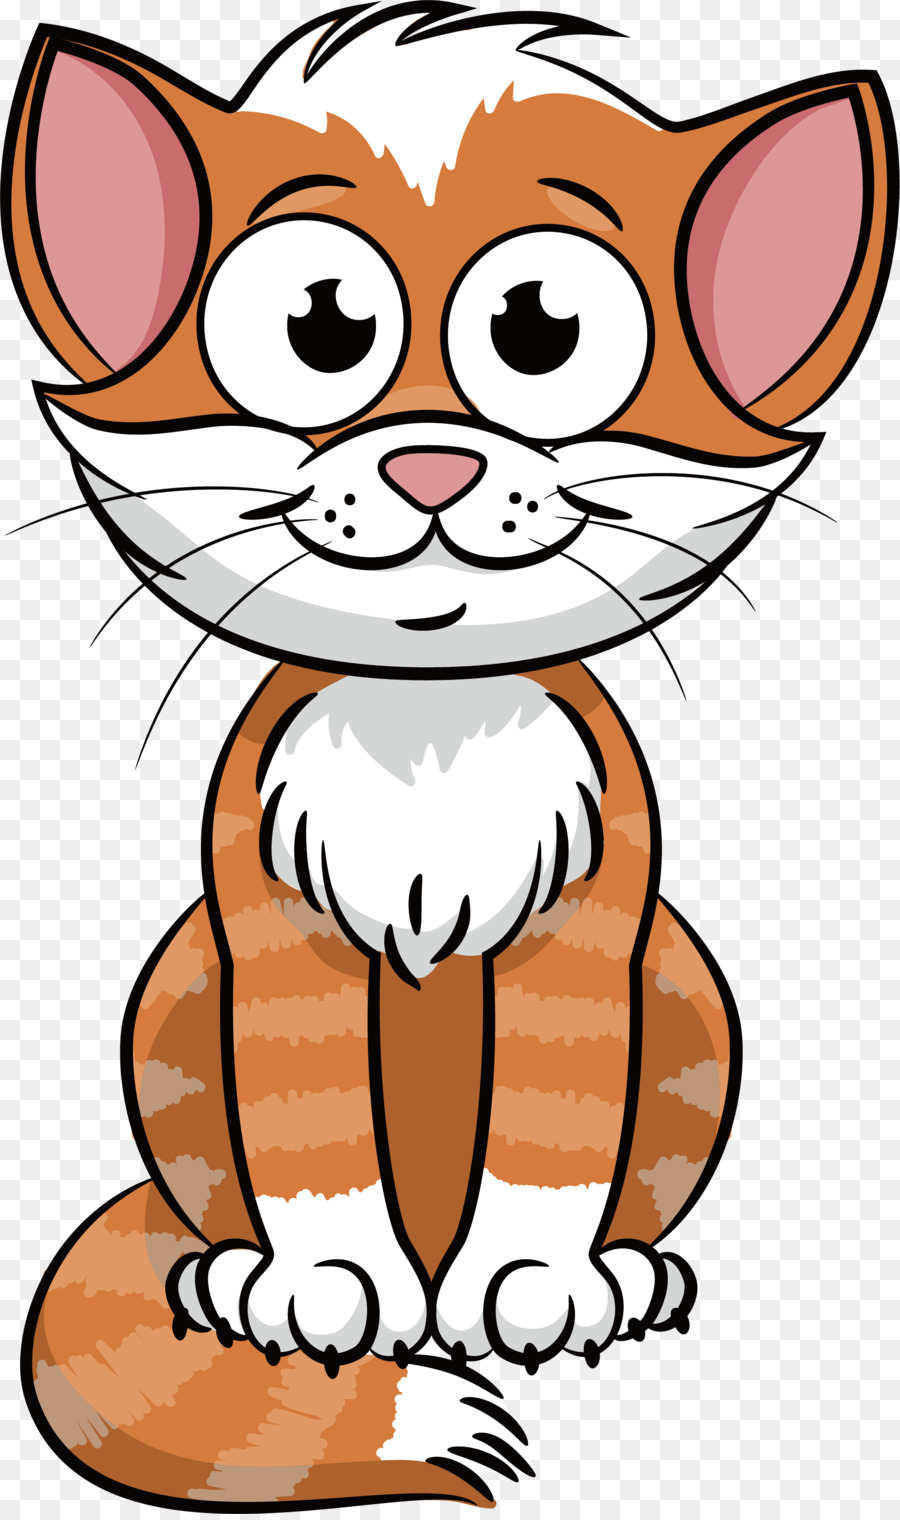 Cat Dog Kitten - Hairy orange cat png download - 1922*3233 - Free Transparent Cat png Download.